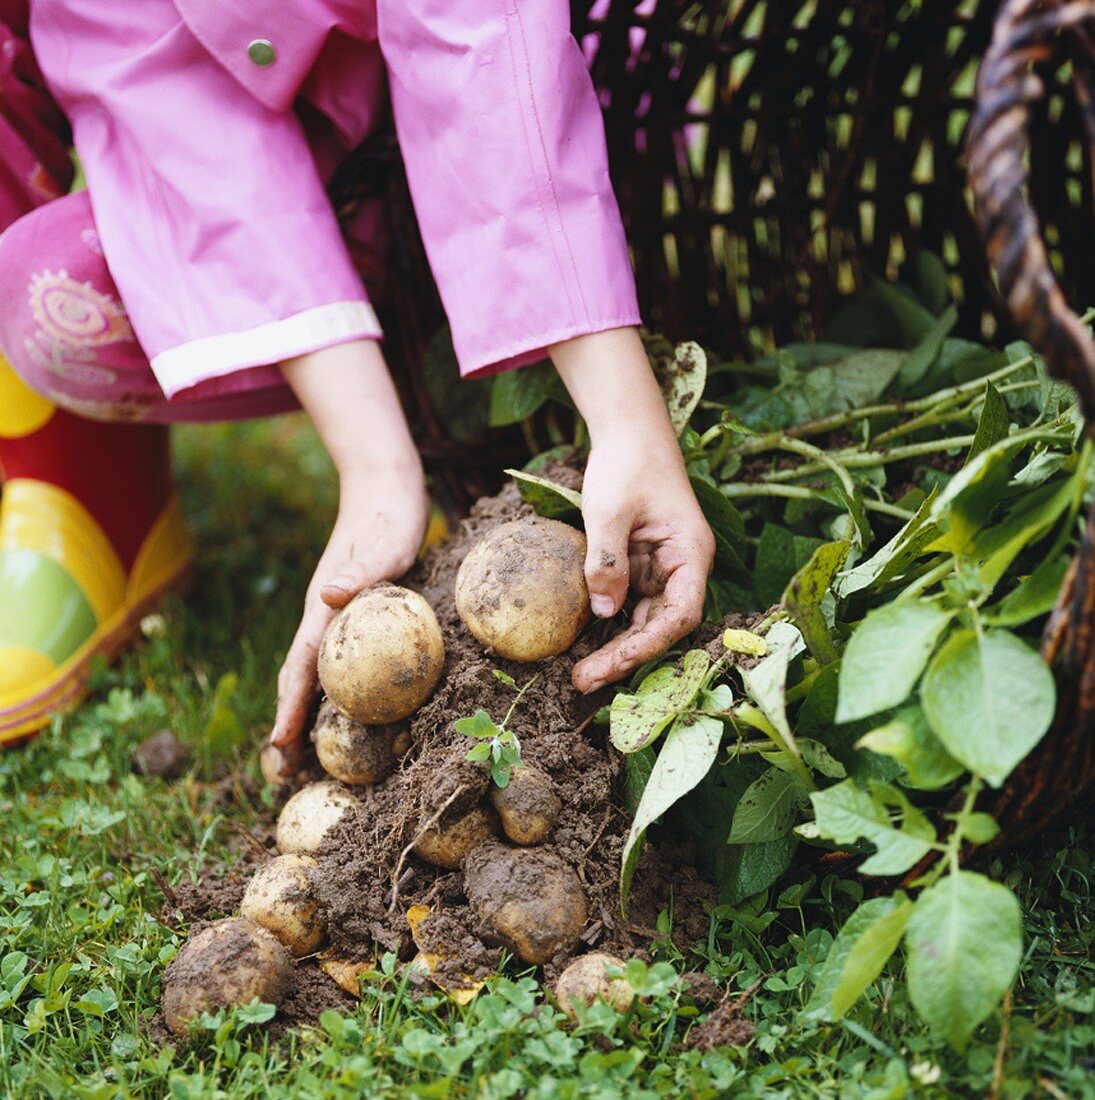 Child's hands holding freshly dug potatoes